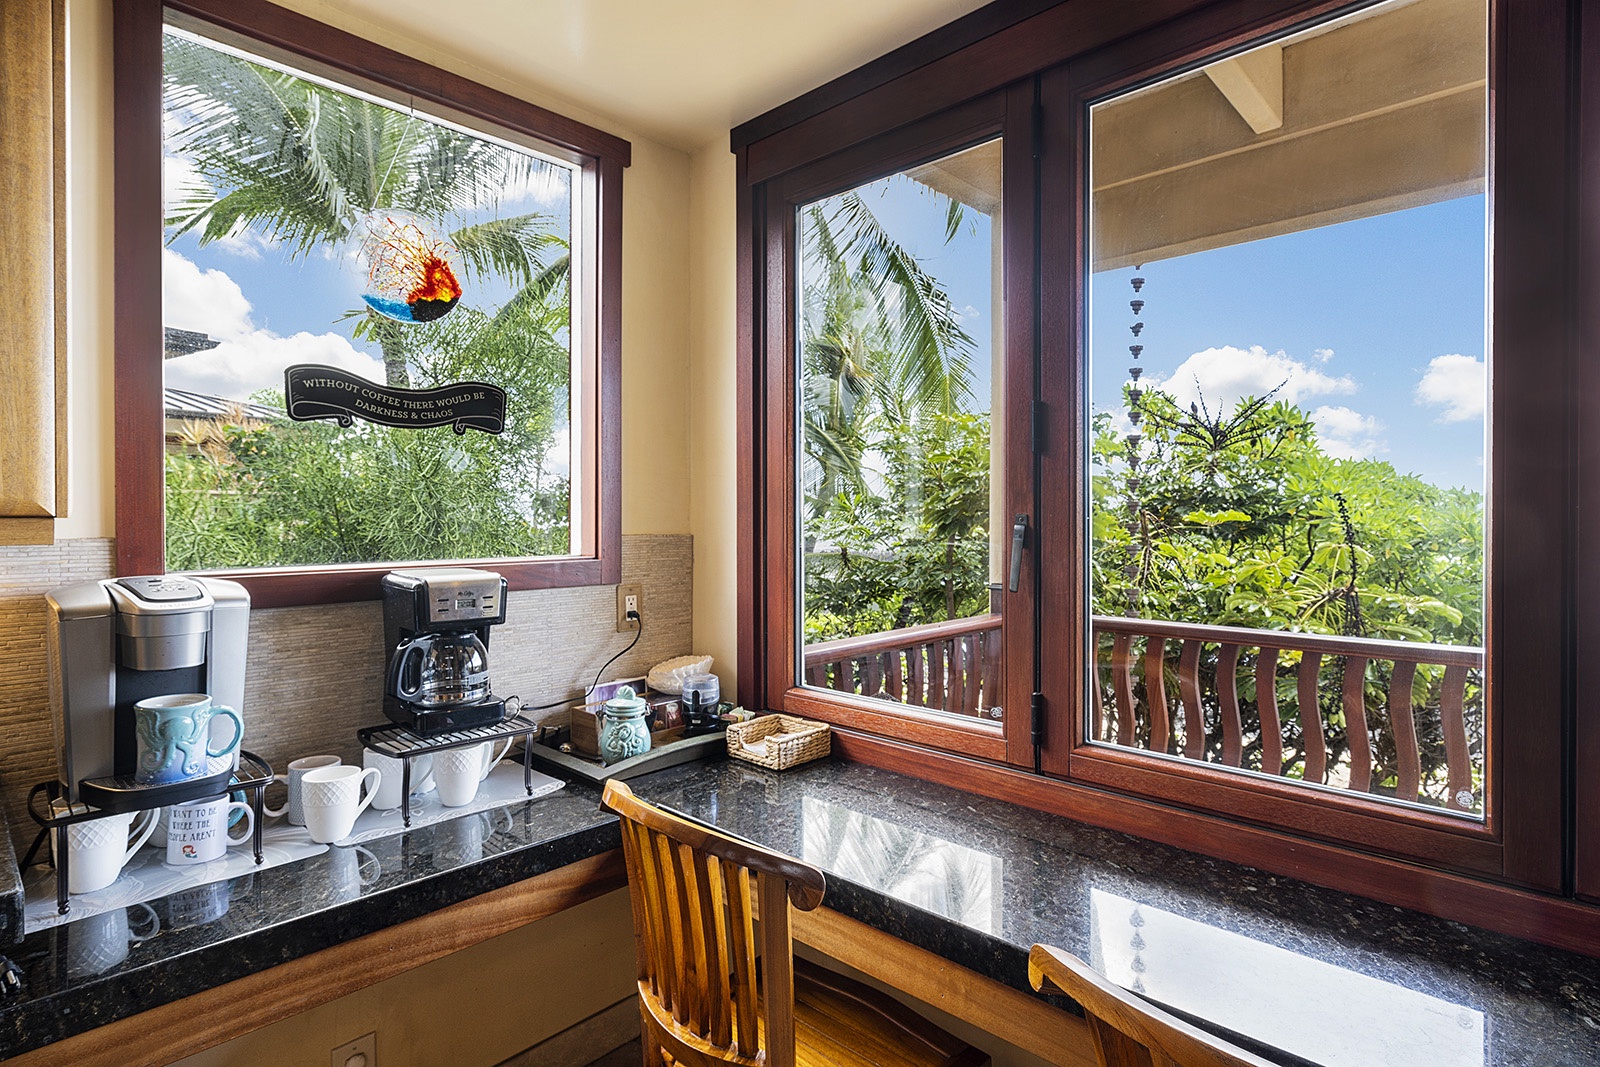 Kailua Kona Vacation Rentals, Mermaid Cove - Coffee station with Keurig  and Coffee pot